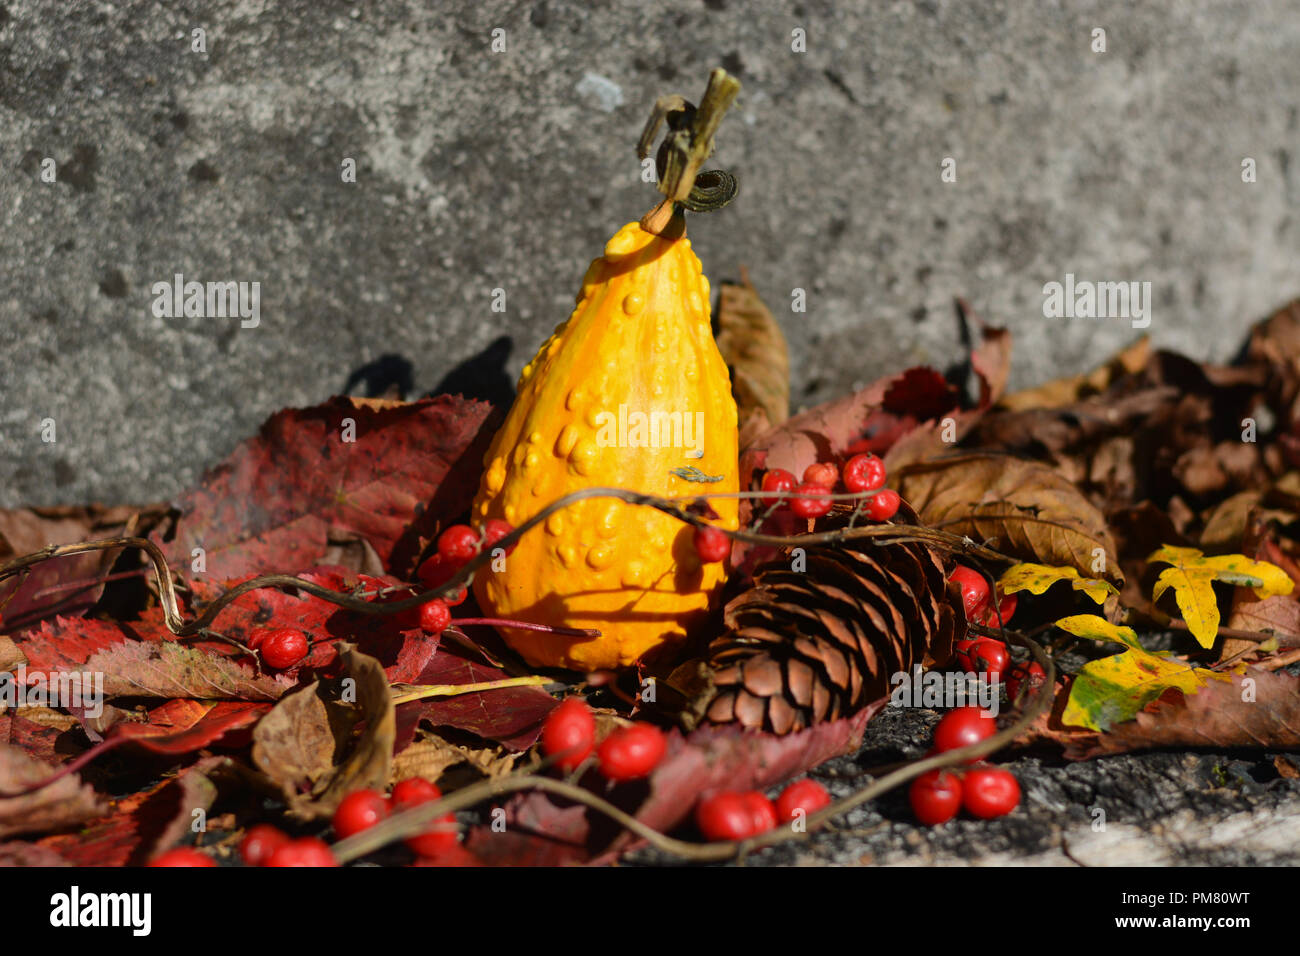 autumn colors Stock Photo